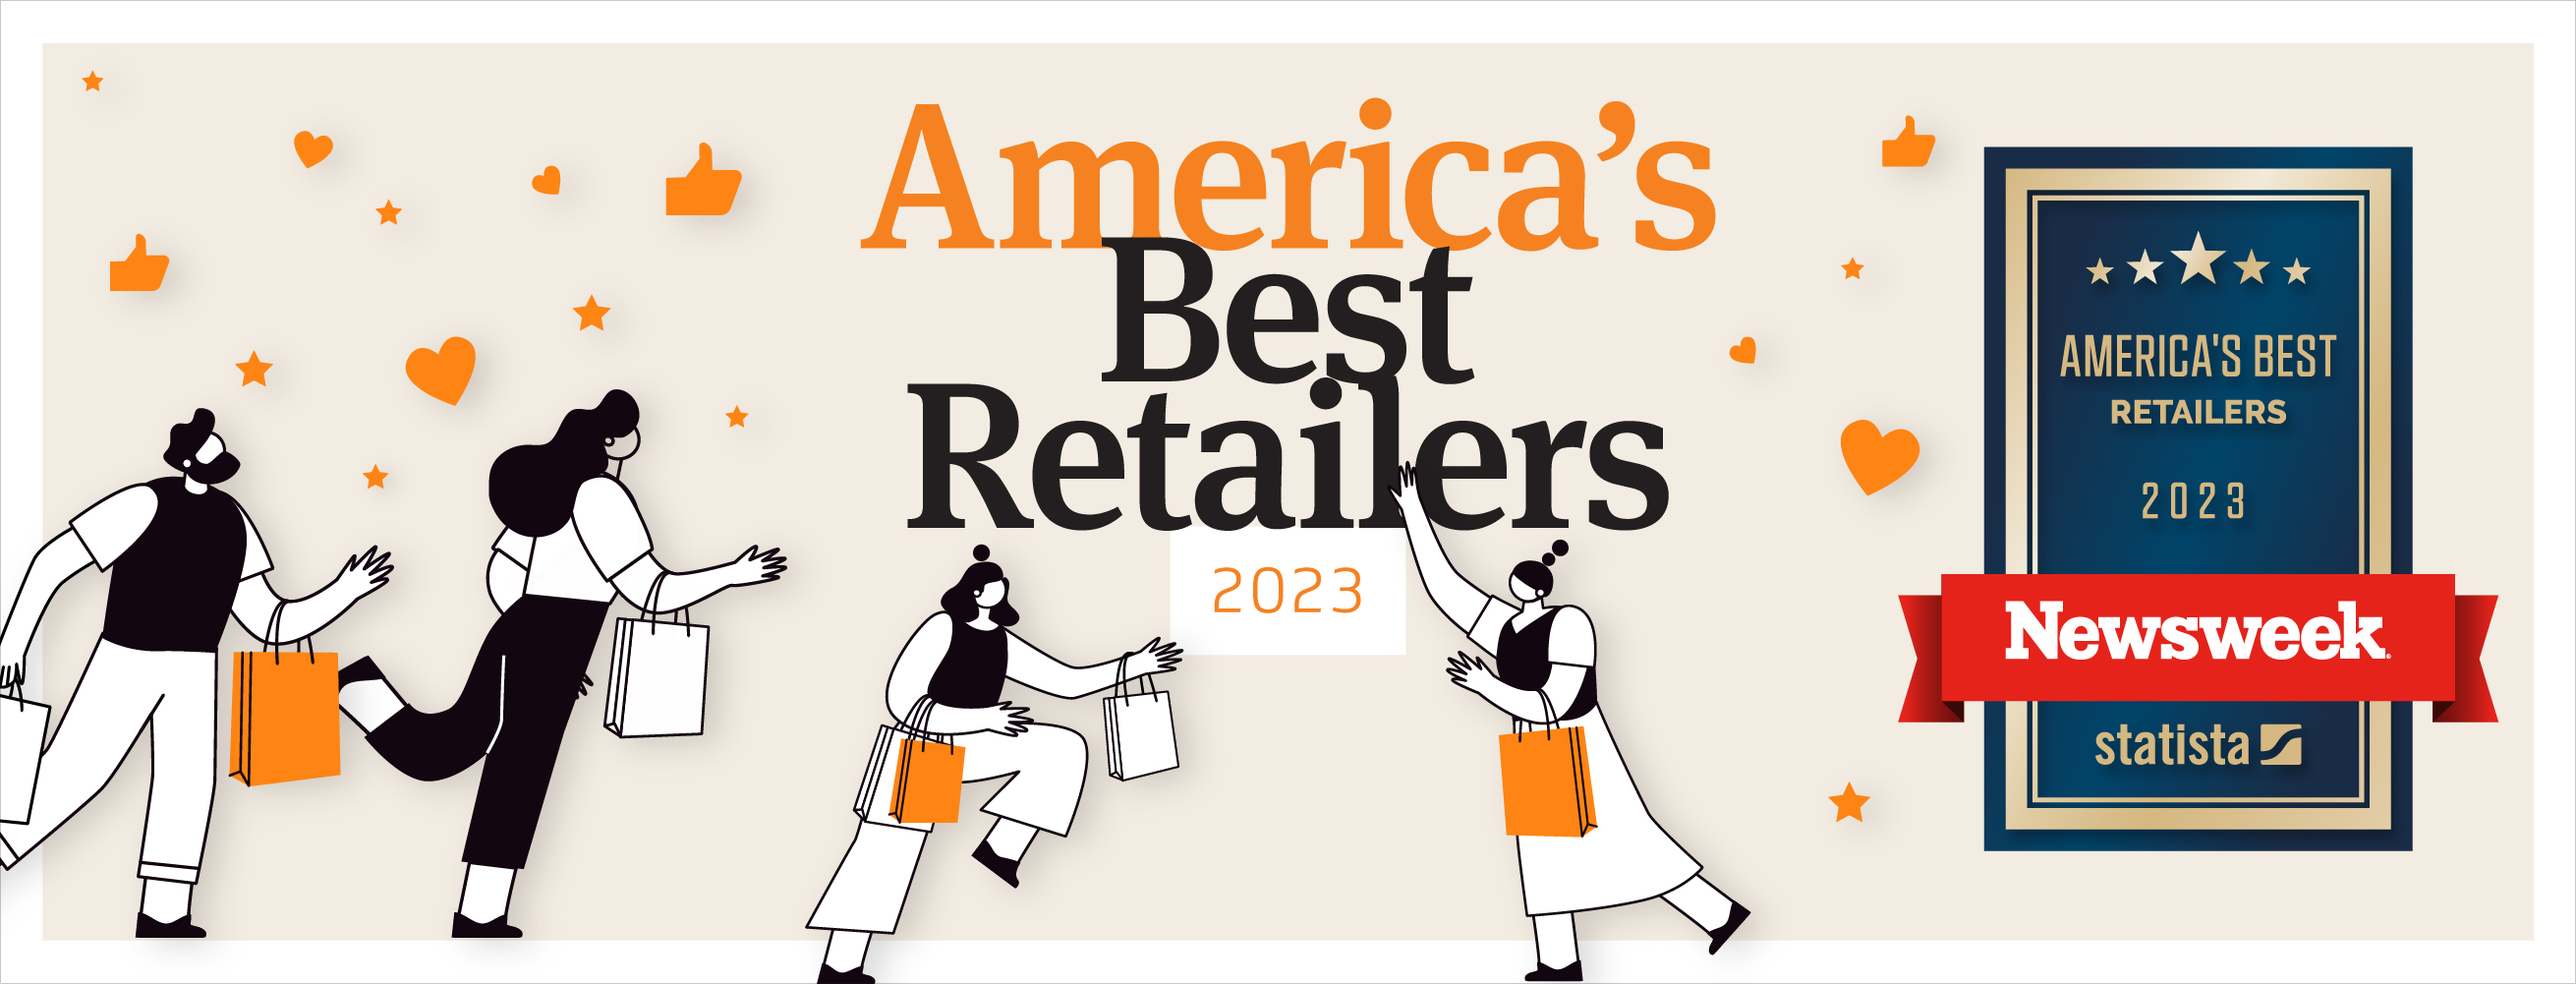 America's Best Retailers 2023